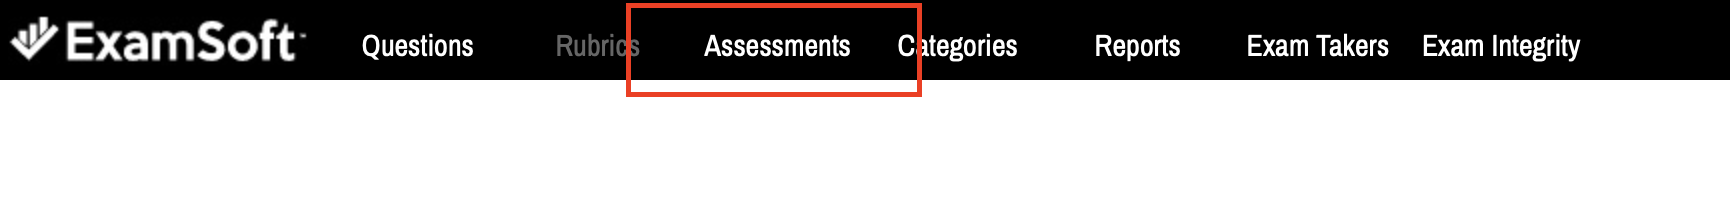 Examsoft menu highlighting the Assessments option